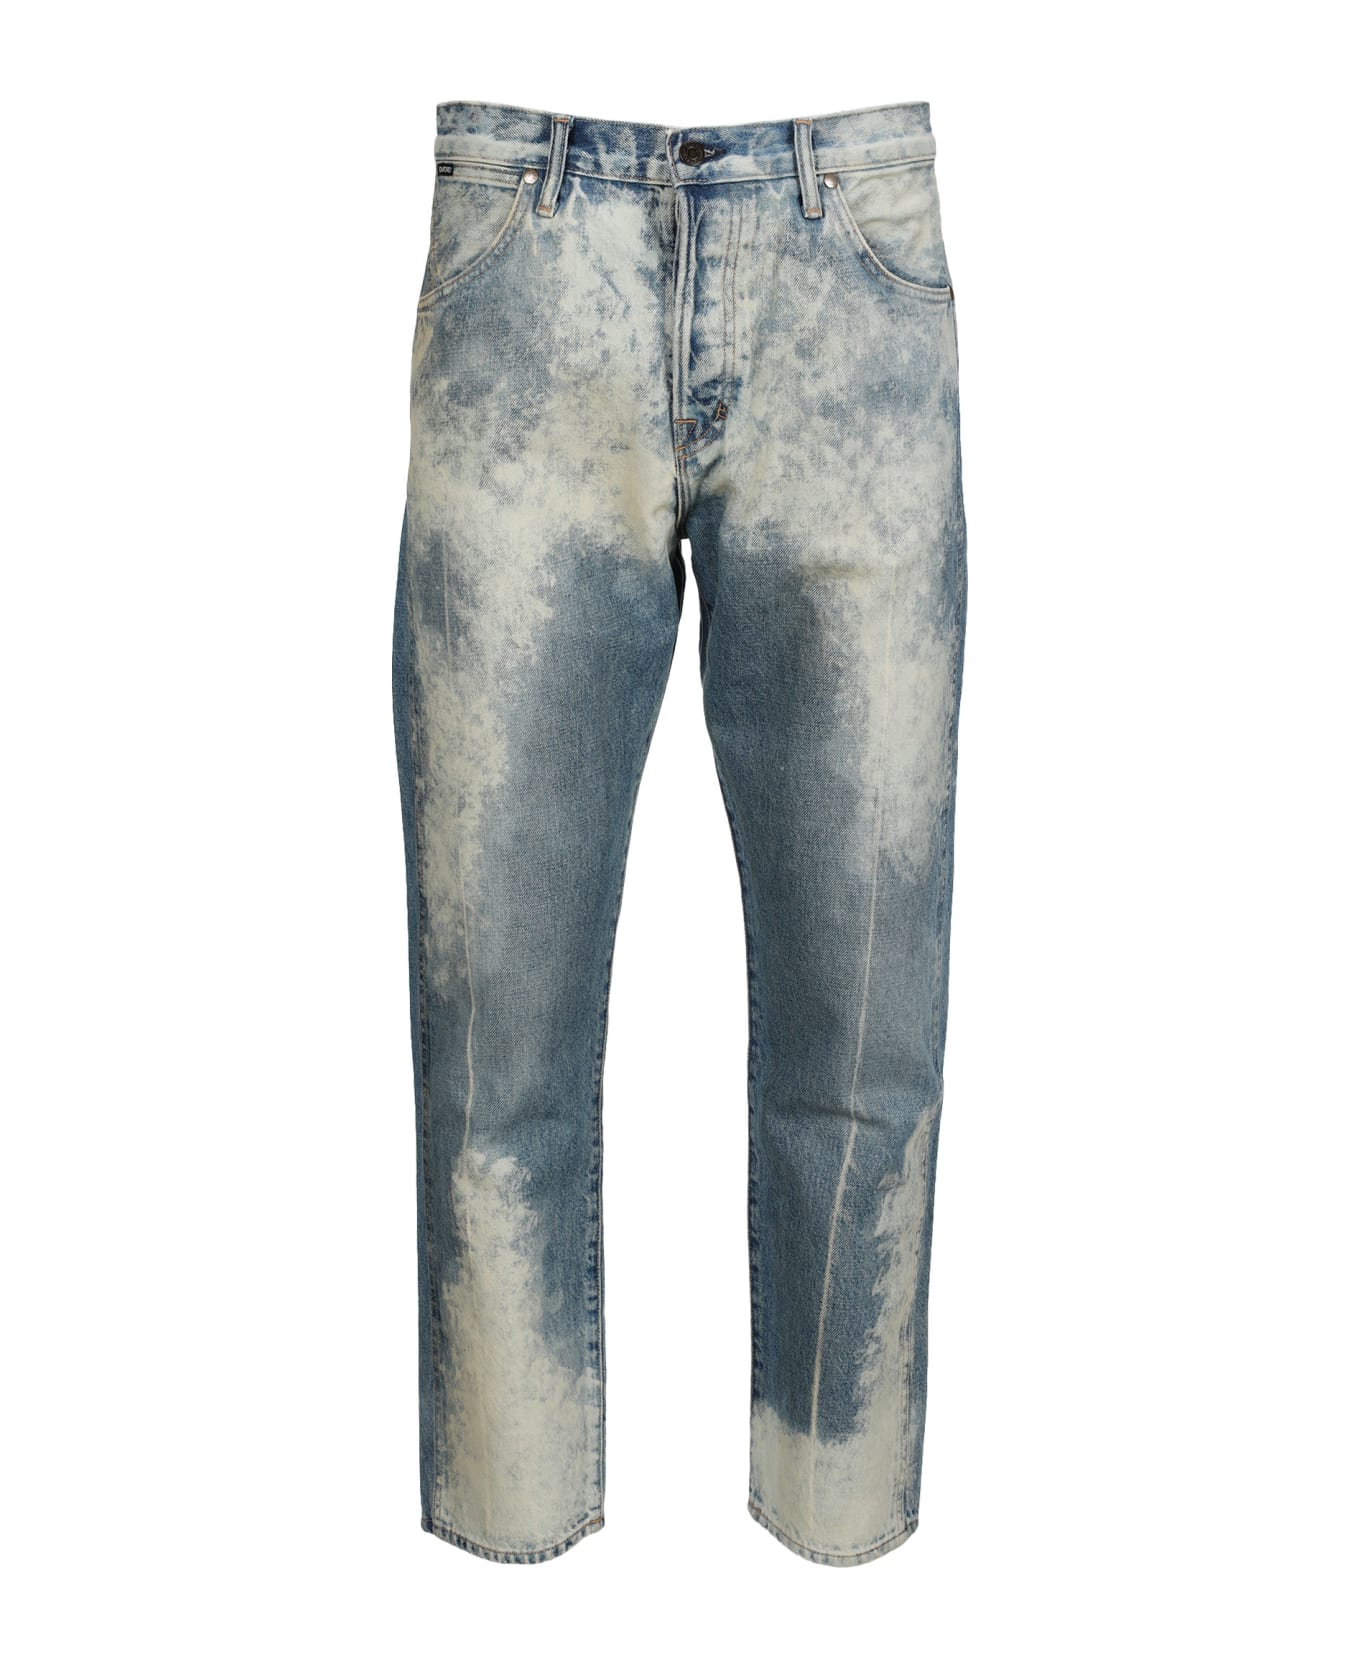 Tom Ford Tapered Jeans - Denim